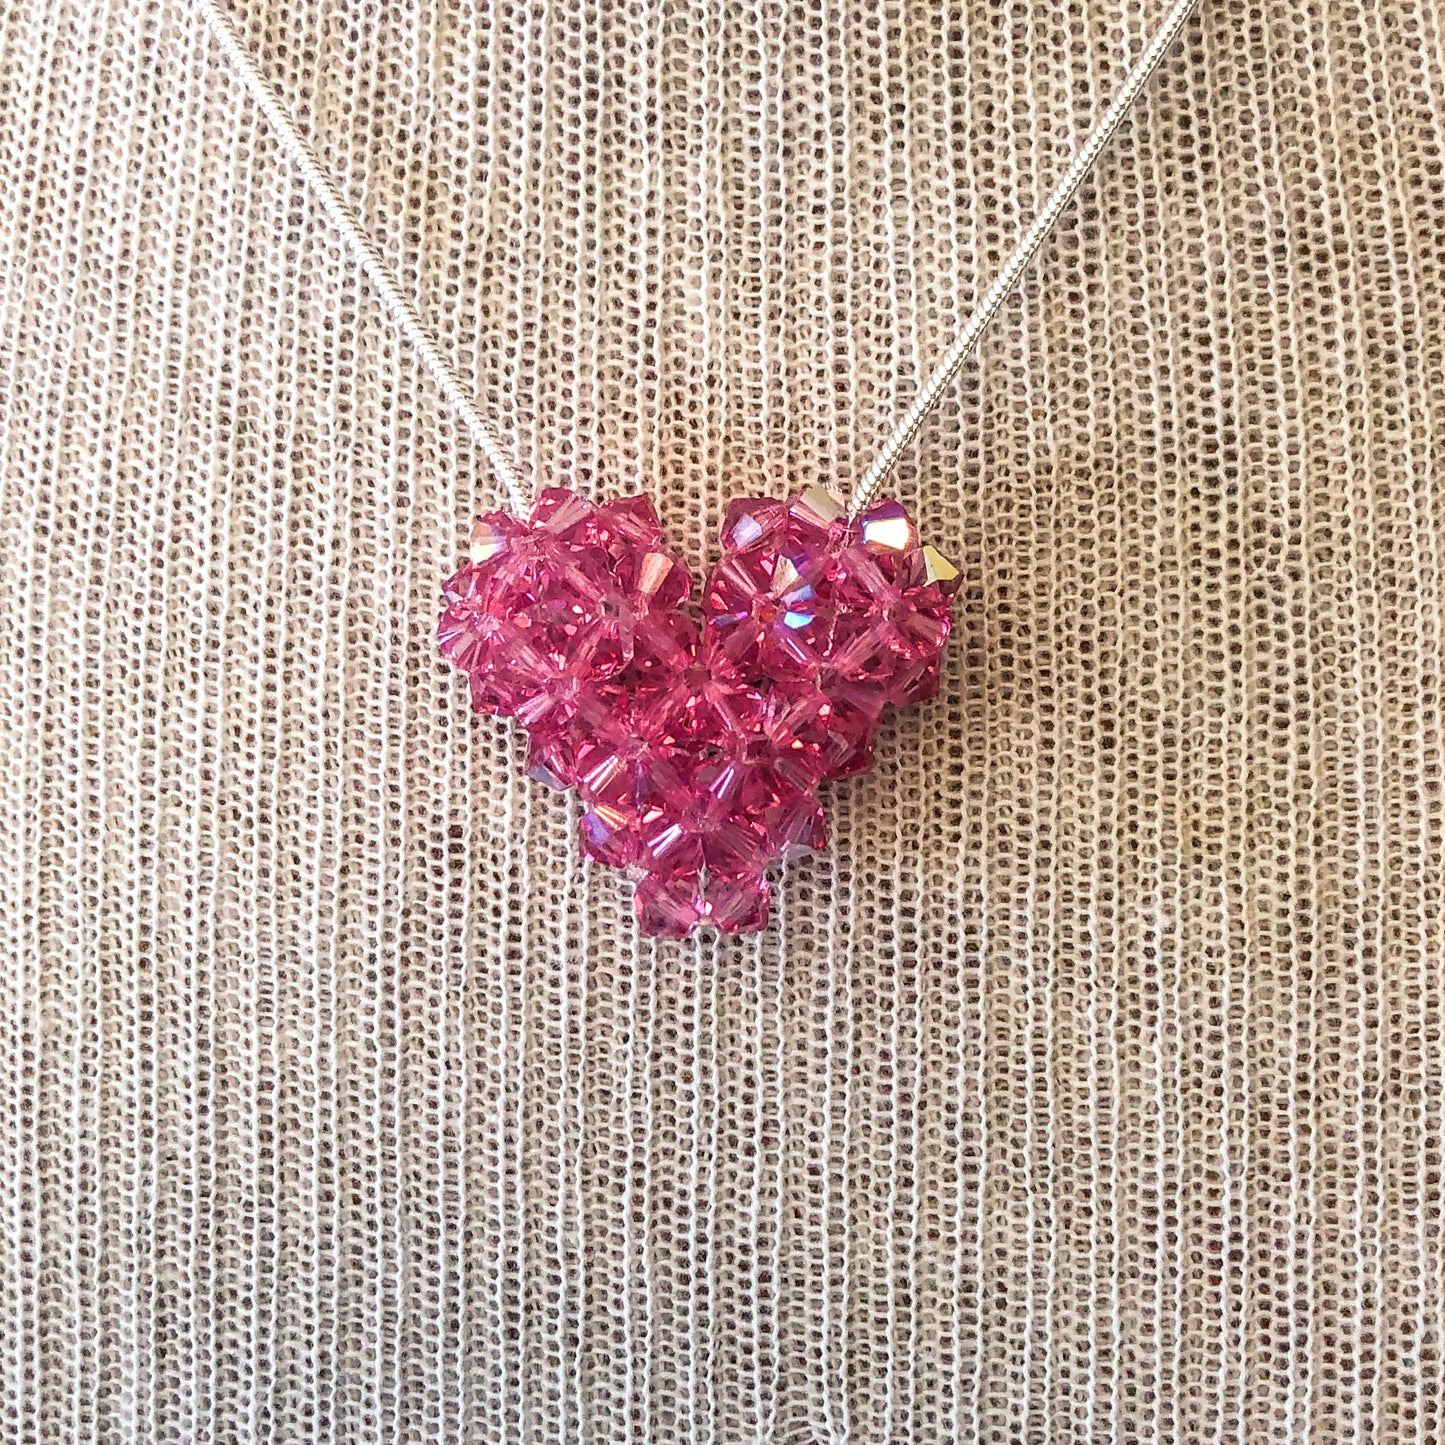 Swarovski Crystal Puffy Heart Necklace